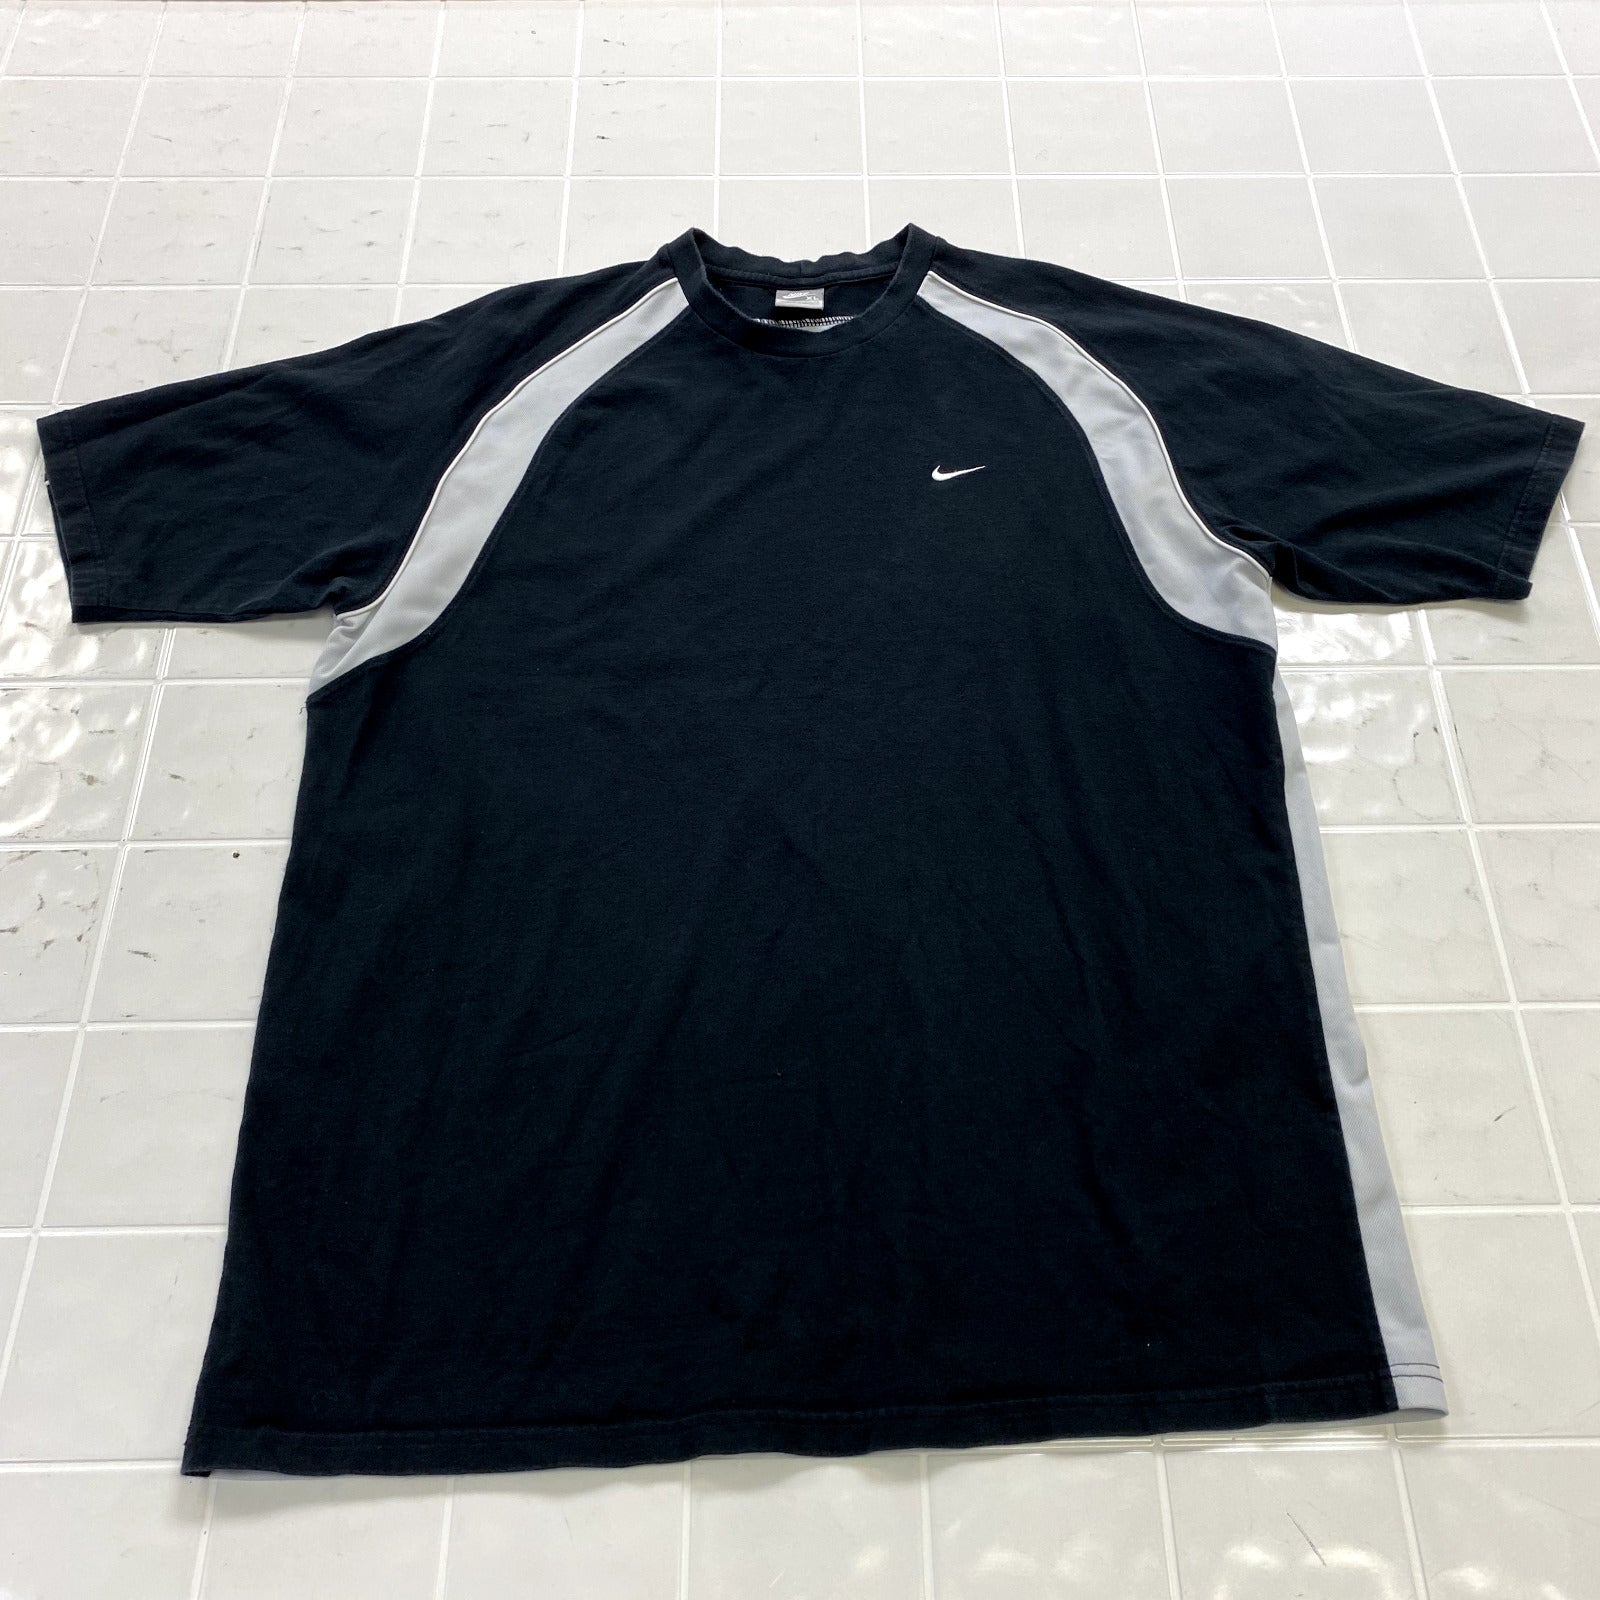 Nike Black With Gray Mesh Backing Short Sleeve Athletic T-Shirt Mens Size XL